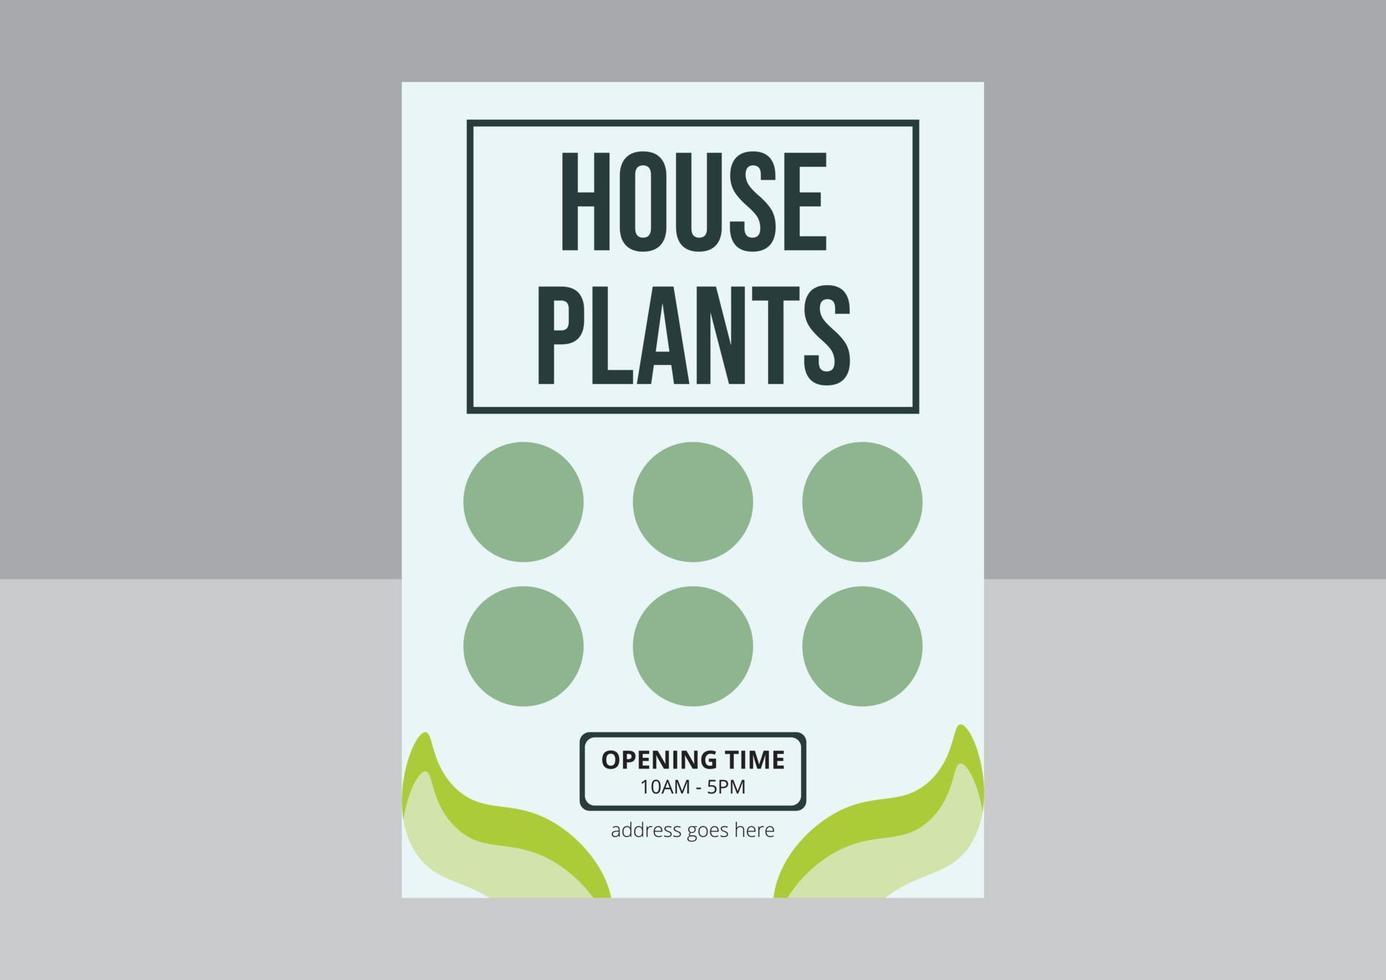 House Plants flyer template design. greenhouse, home garden, gardening, plant lover. A4 vector illustration for poster, banner, flyer, advertising.